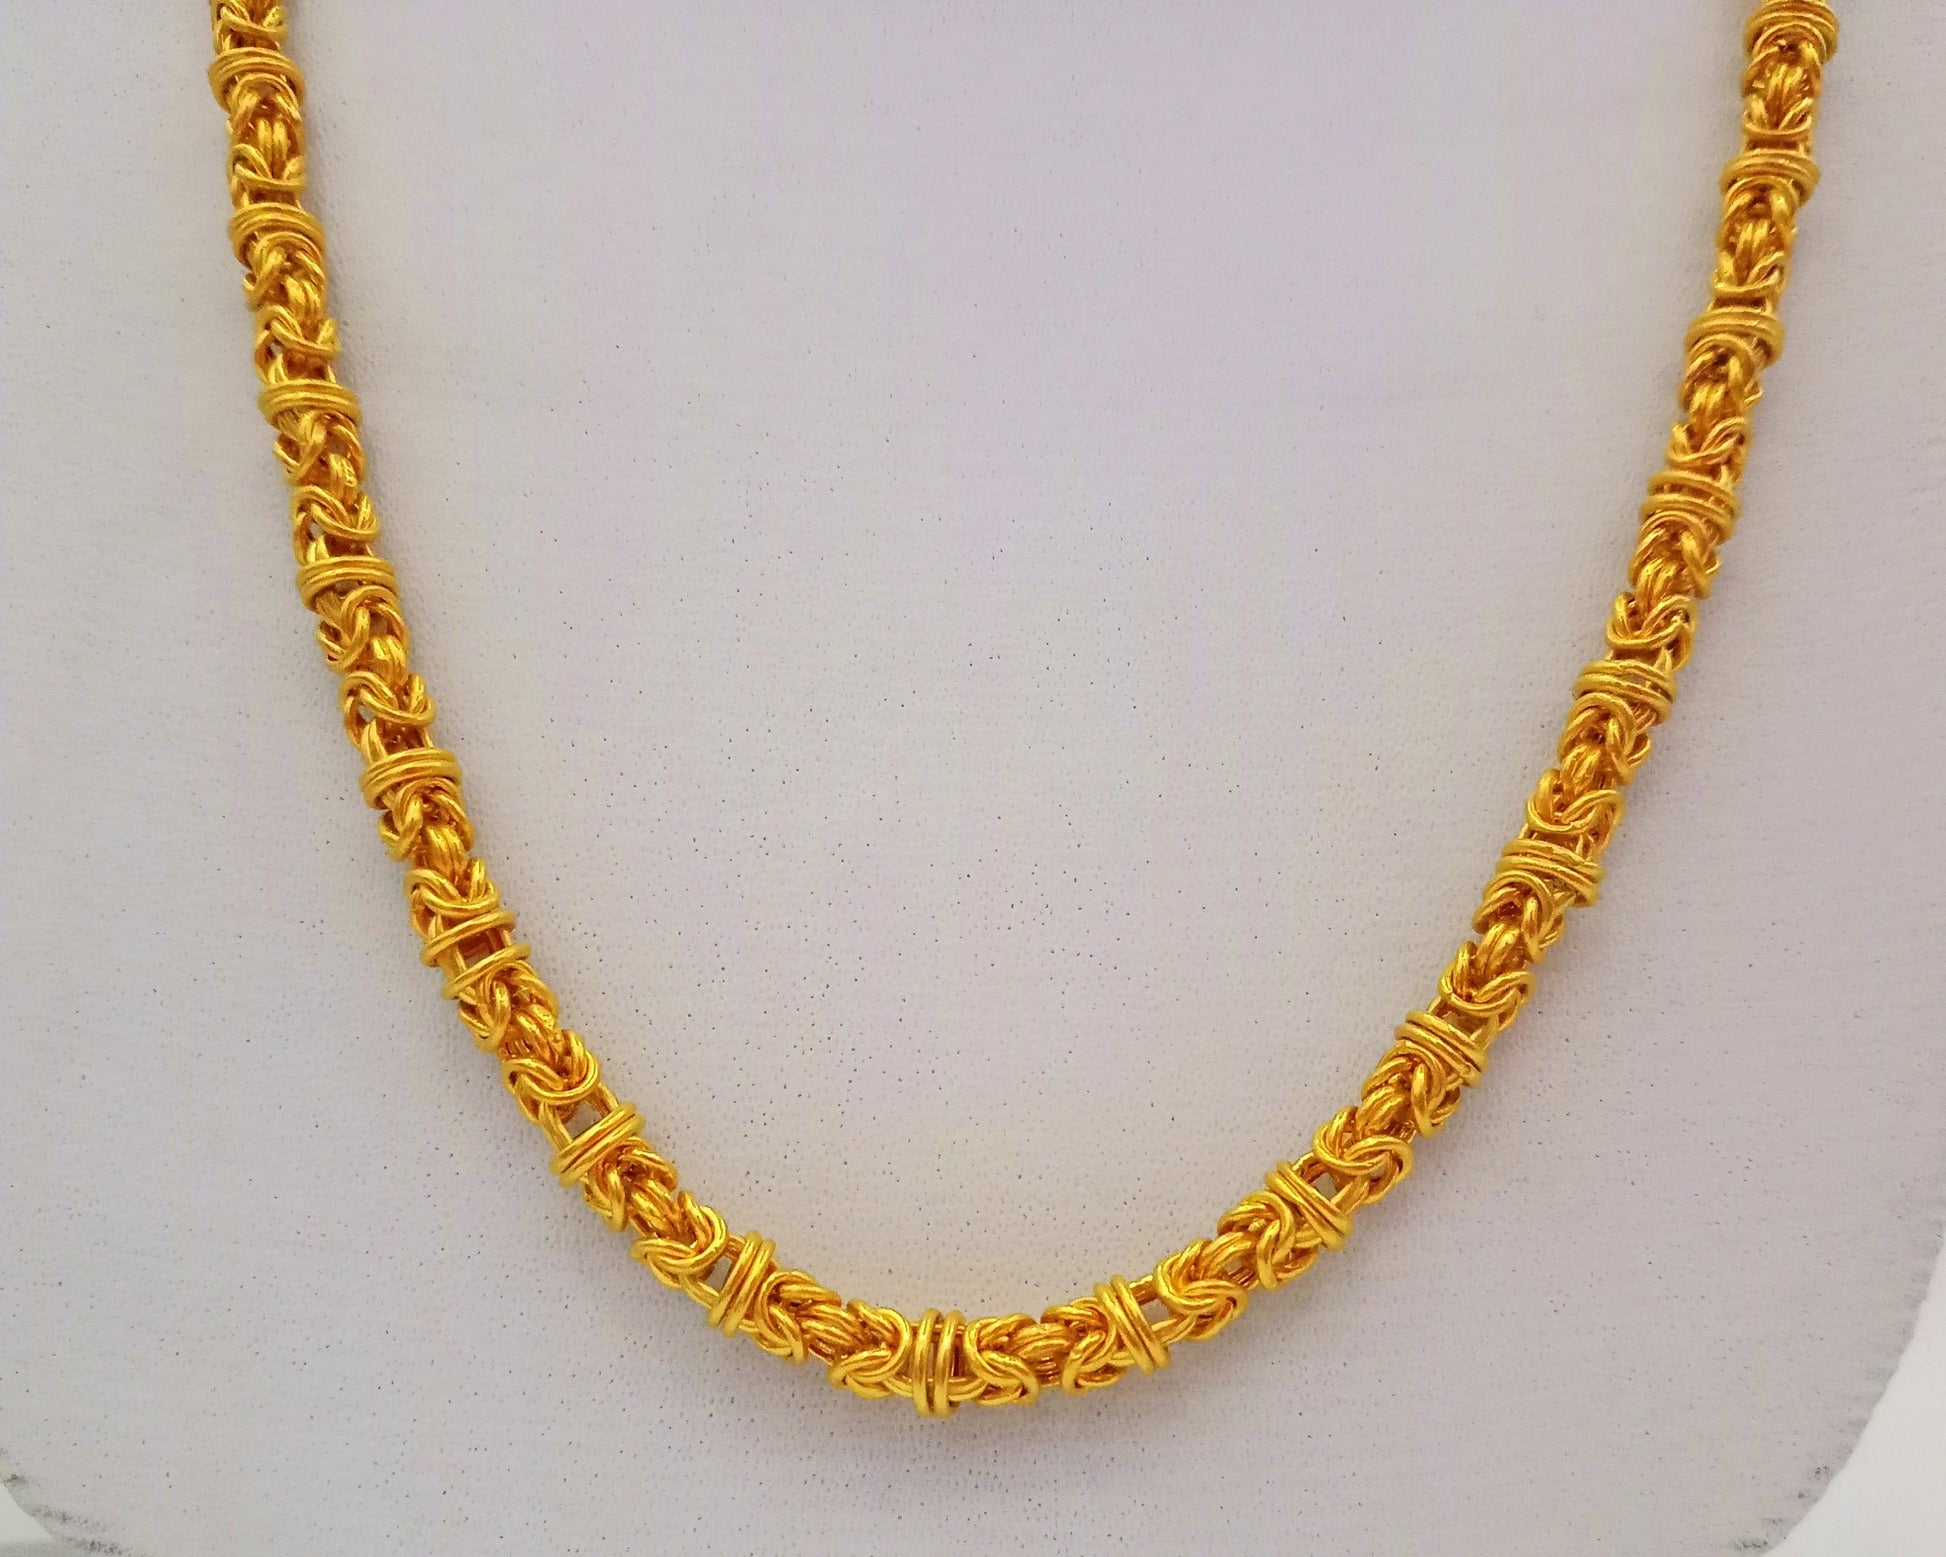 20 inches long 22k yellow gold handmade fabulous byzantine stylish chain necklace unisex gifting jewelry - TRIBAL ORNAMENTS